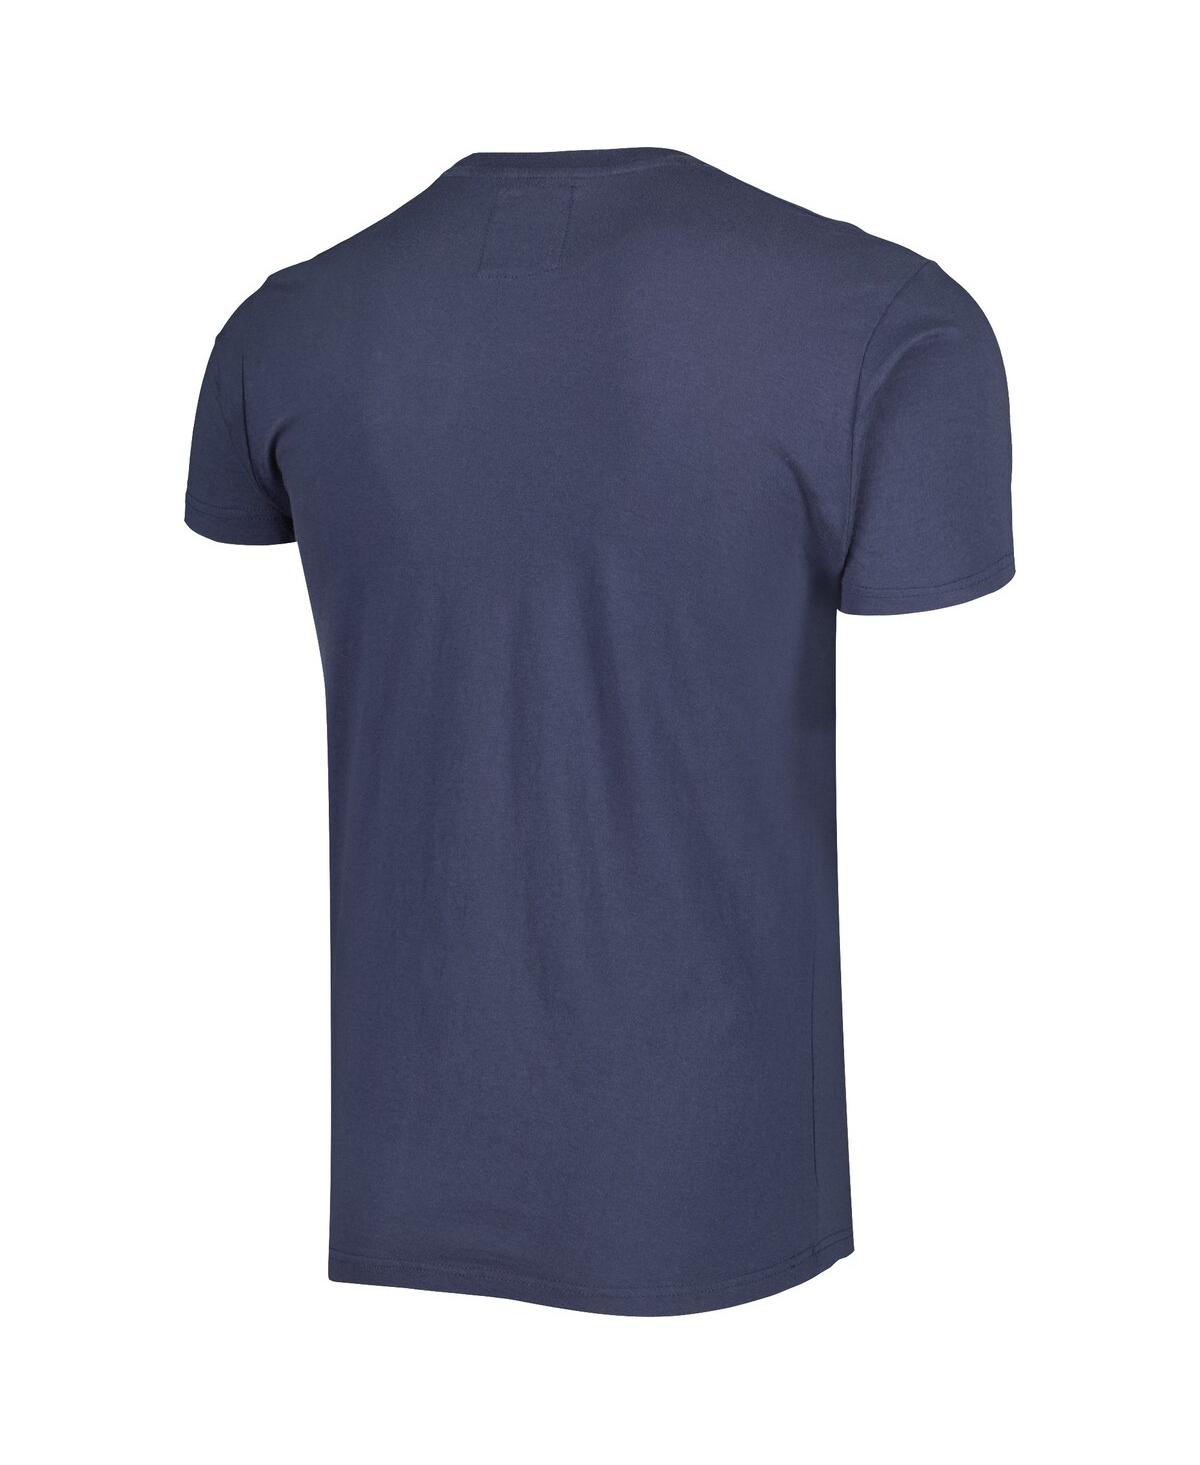 Shop American Needle Men's And Women's  Navy Hamms Brass Tacks T-shirt